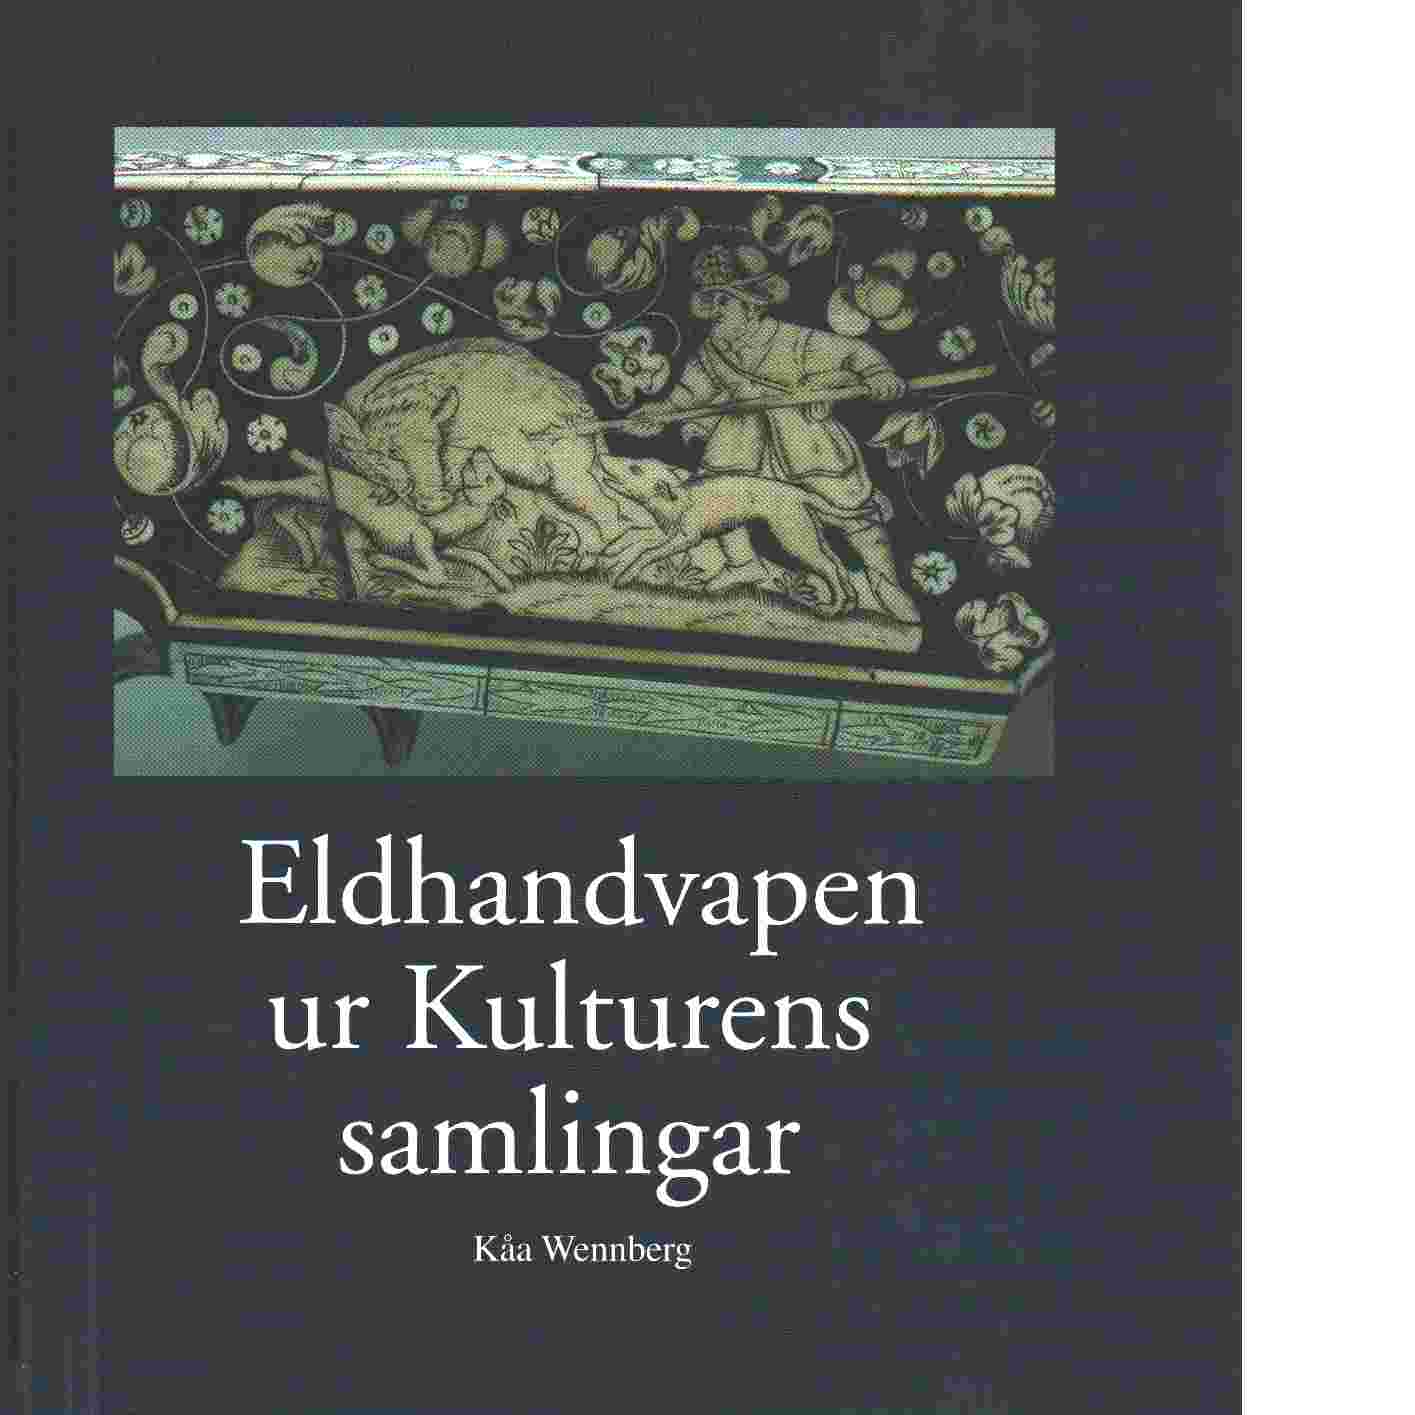 Eldhandvapen ur Kulturens samlingar - Wennberg, Kåa